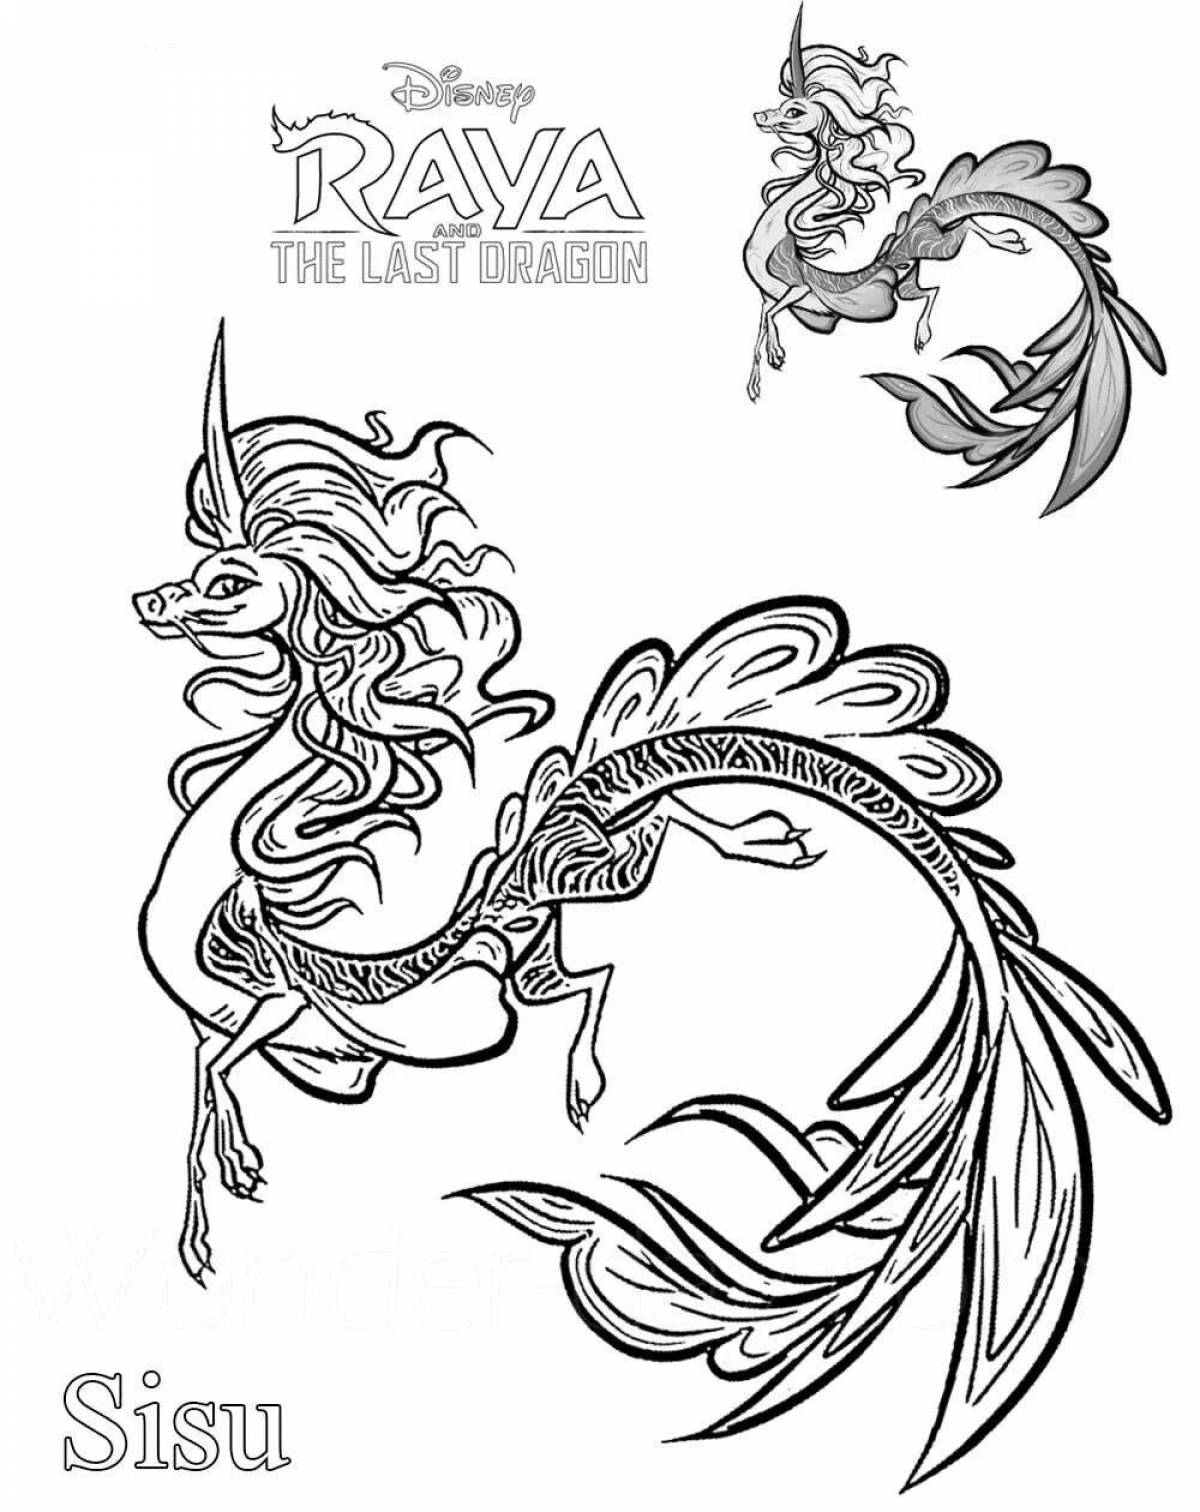 Coloring king dragon shisu